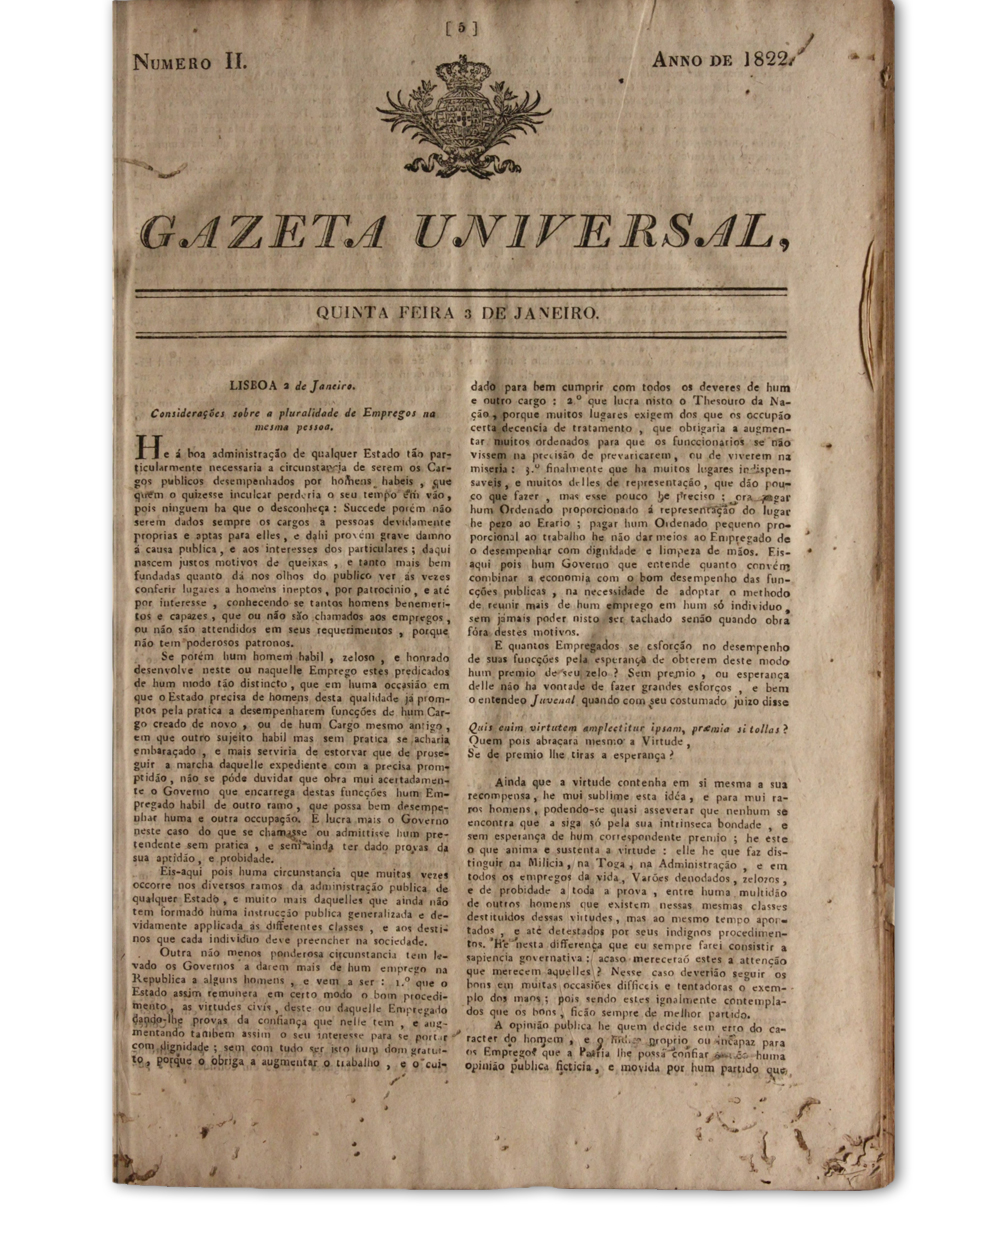 Gazeta universal. Lisboa : Imprensa Nacional, 1823. Cota: 12/1823